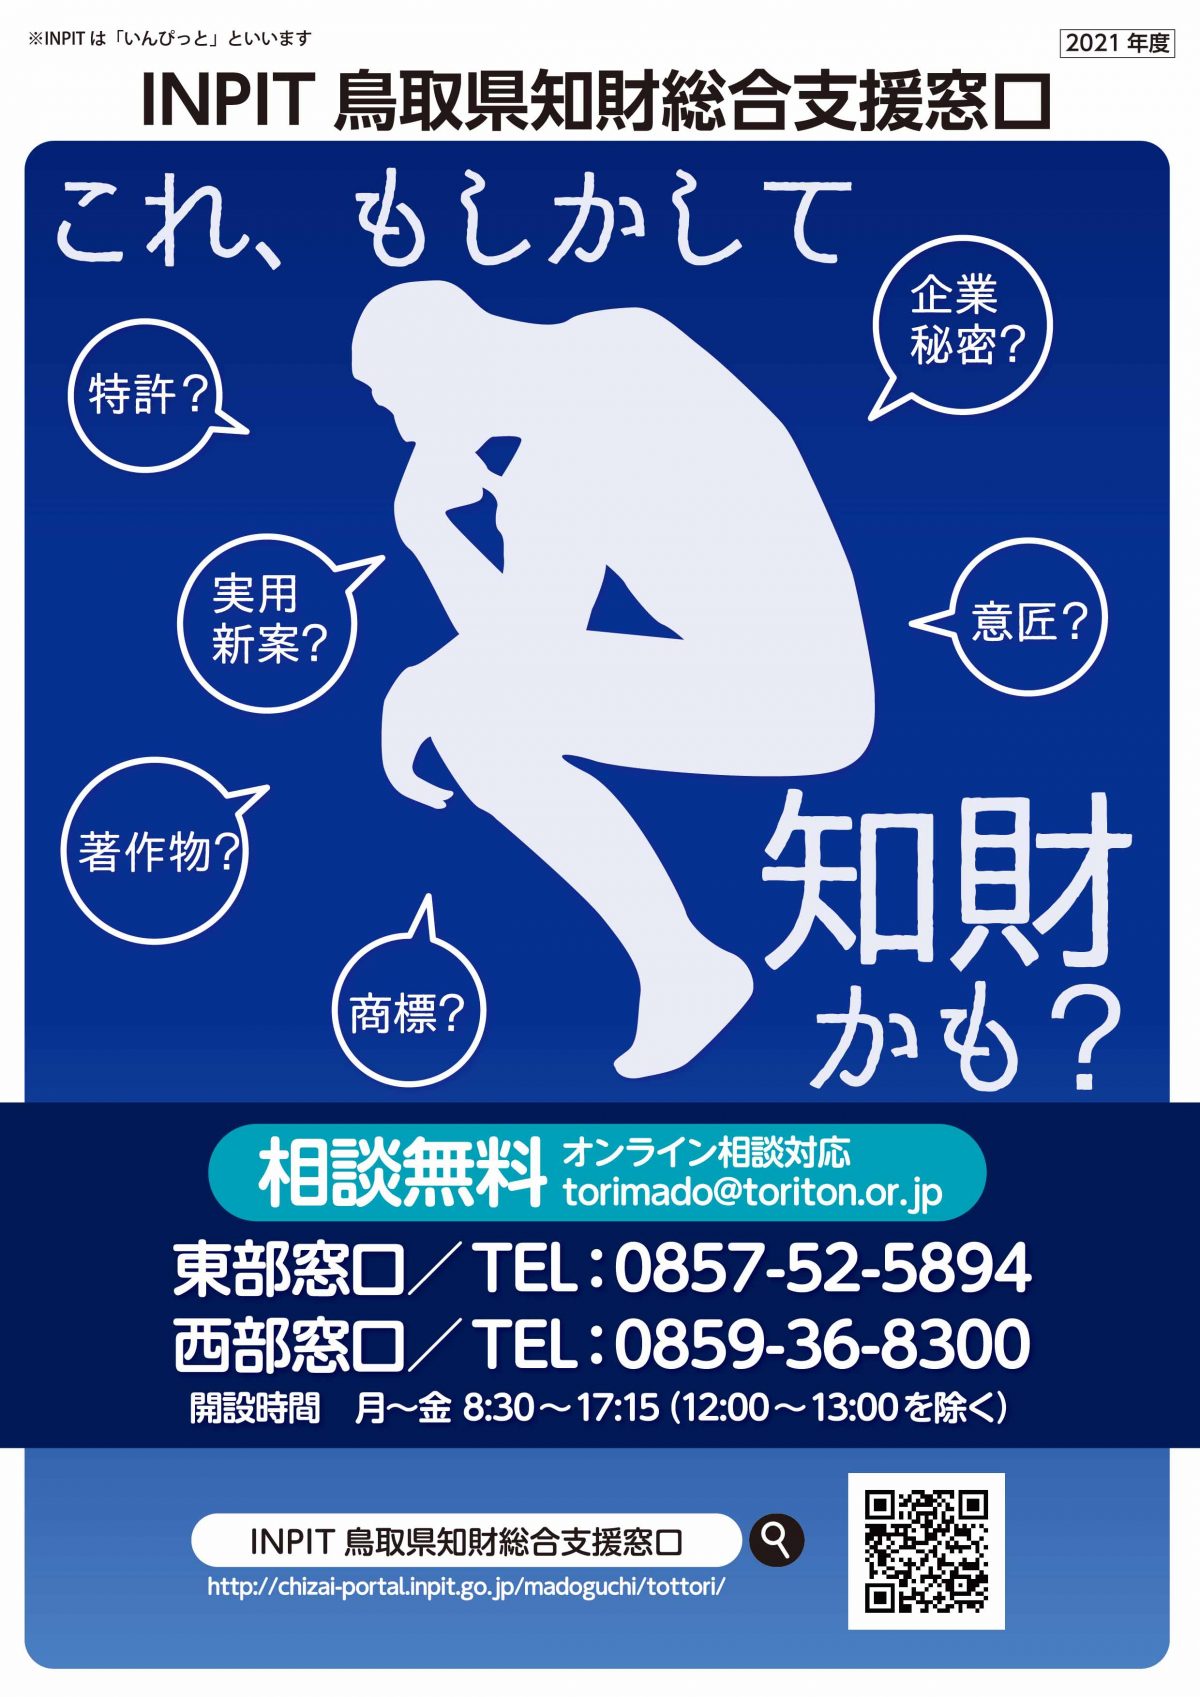 ＩＮＰＩＴ鳥取県知財総合支援窓口　ＦＭ鳥取「ＩＮＰＩＴの知財ってなぁ～に？」にラジオ出演した際の音源を掲載しました。